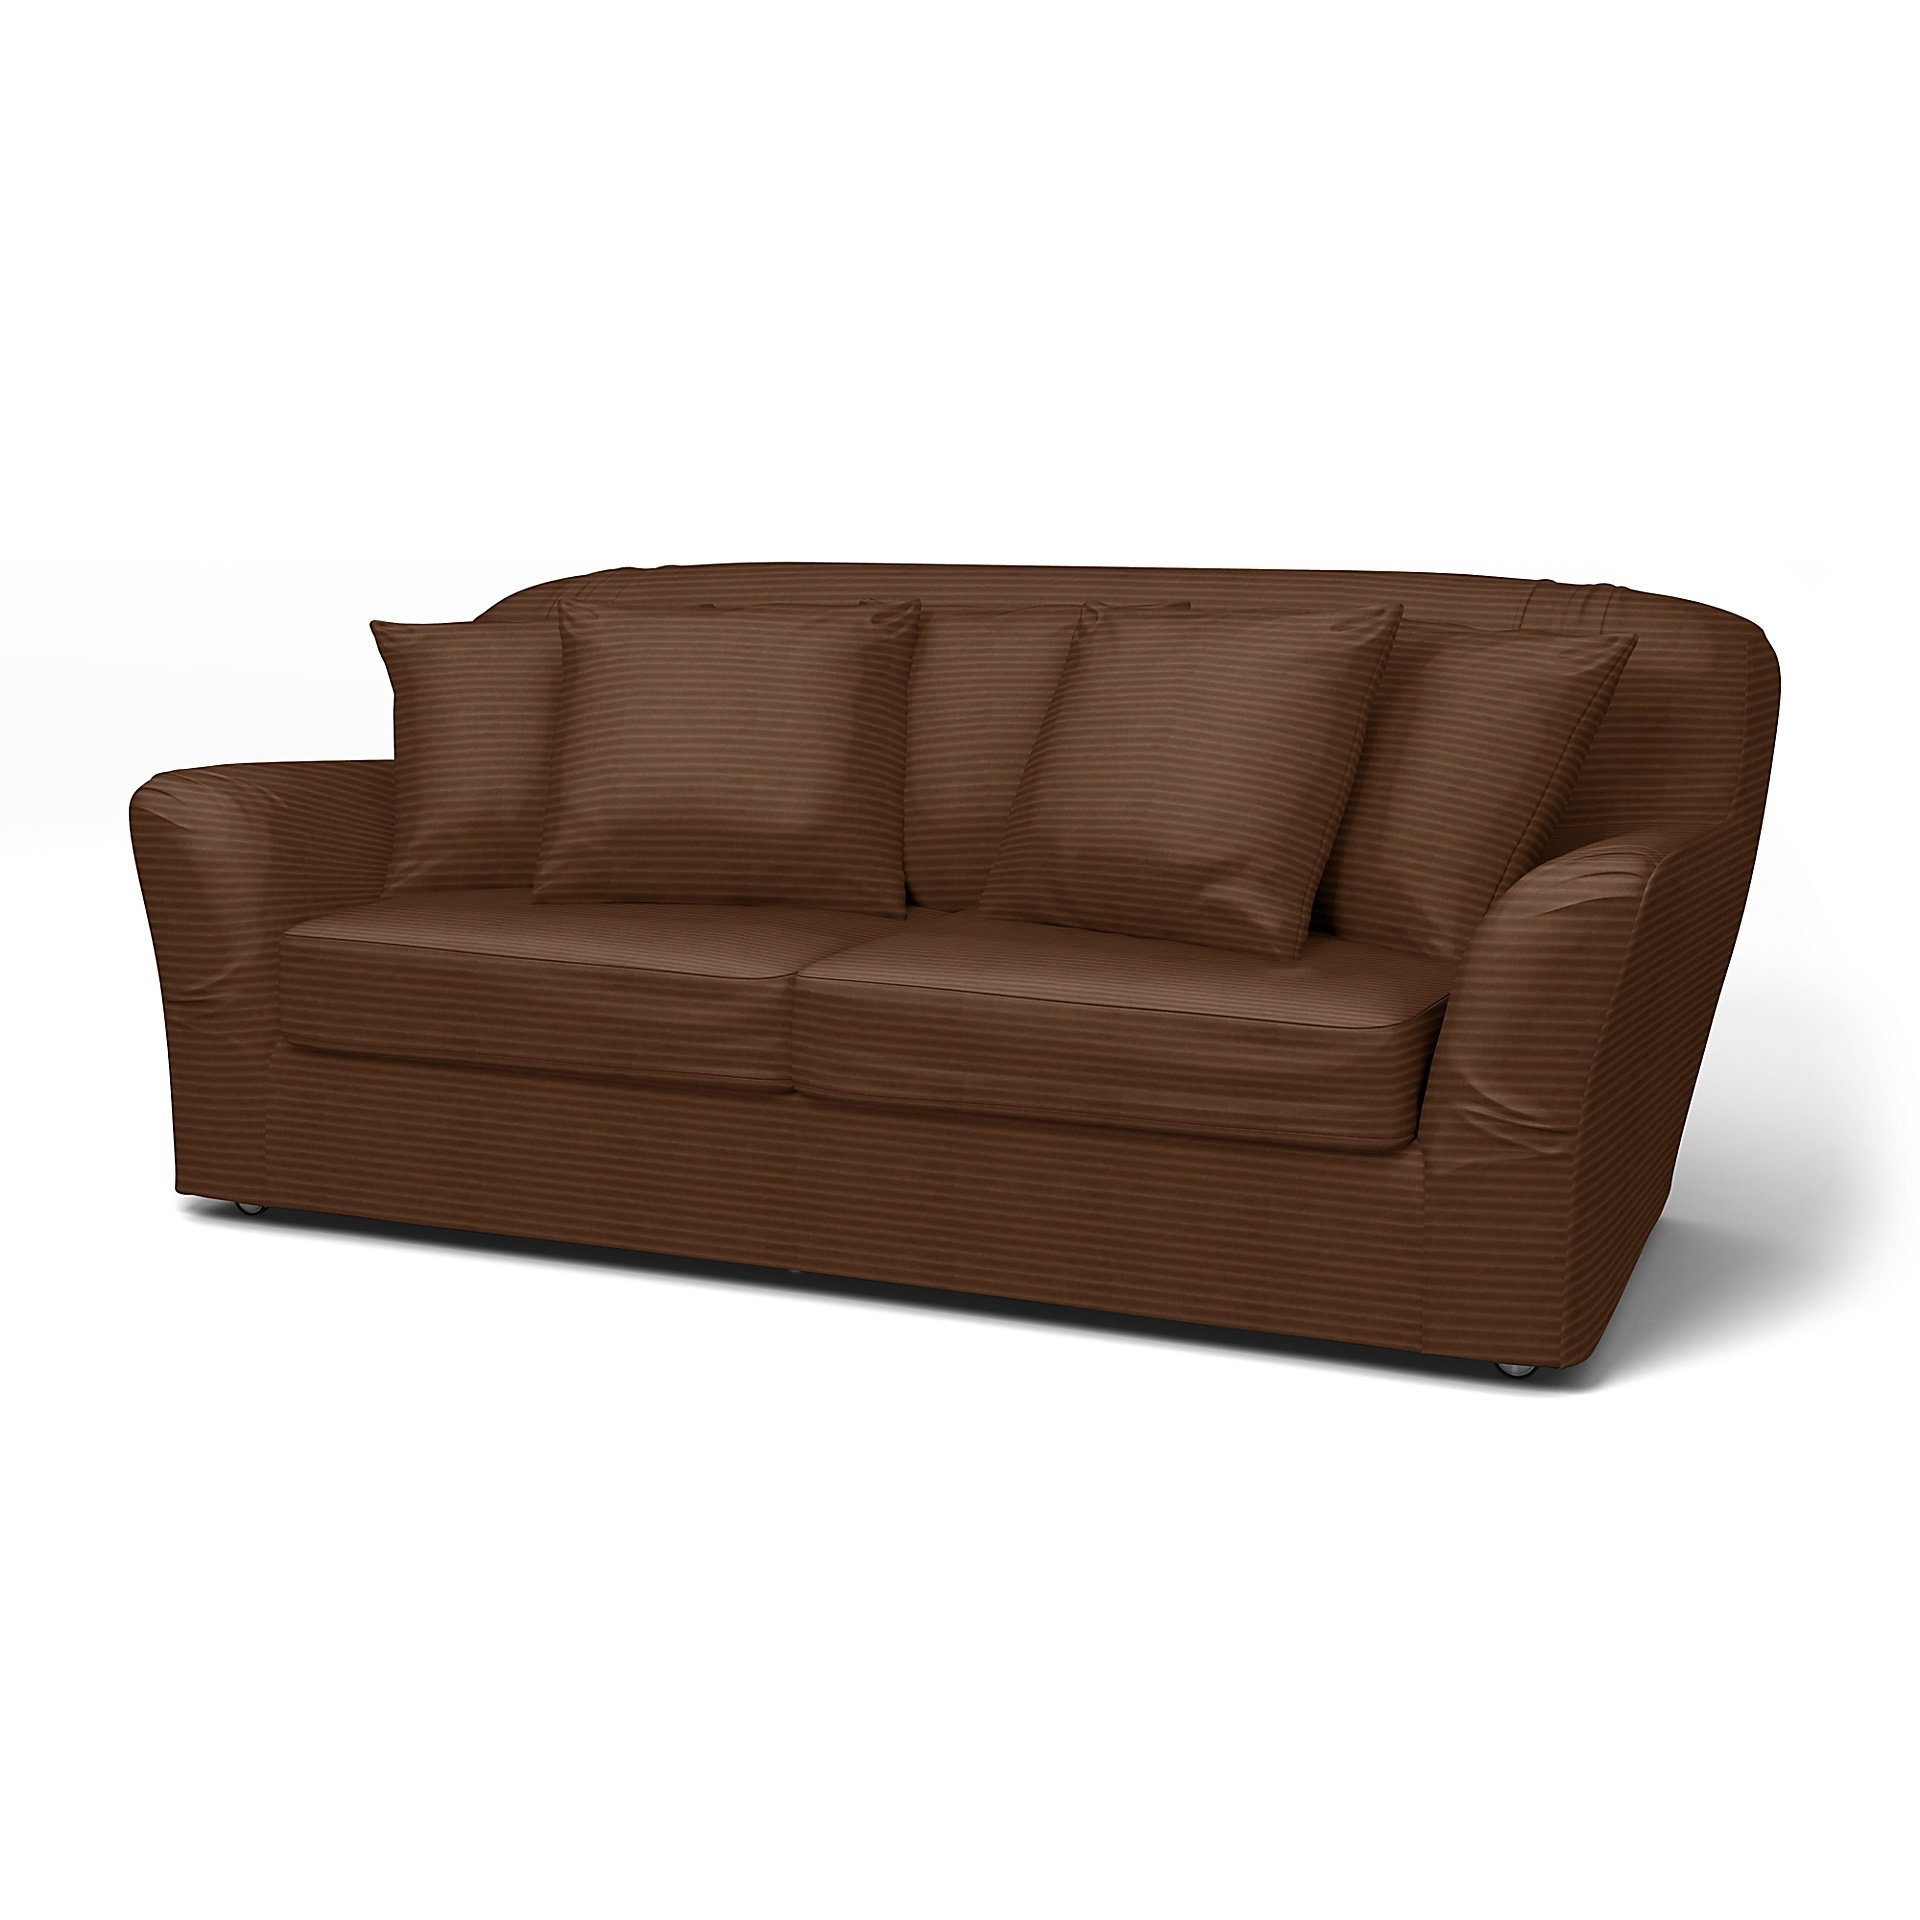 IKEA - Tomelilla Sofa Bed Cover (Small model), Chocolate Brown, Corduroy - Bemz